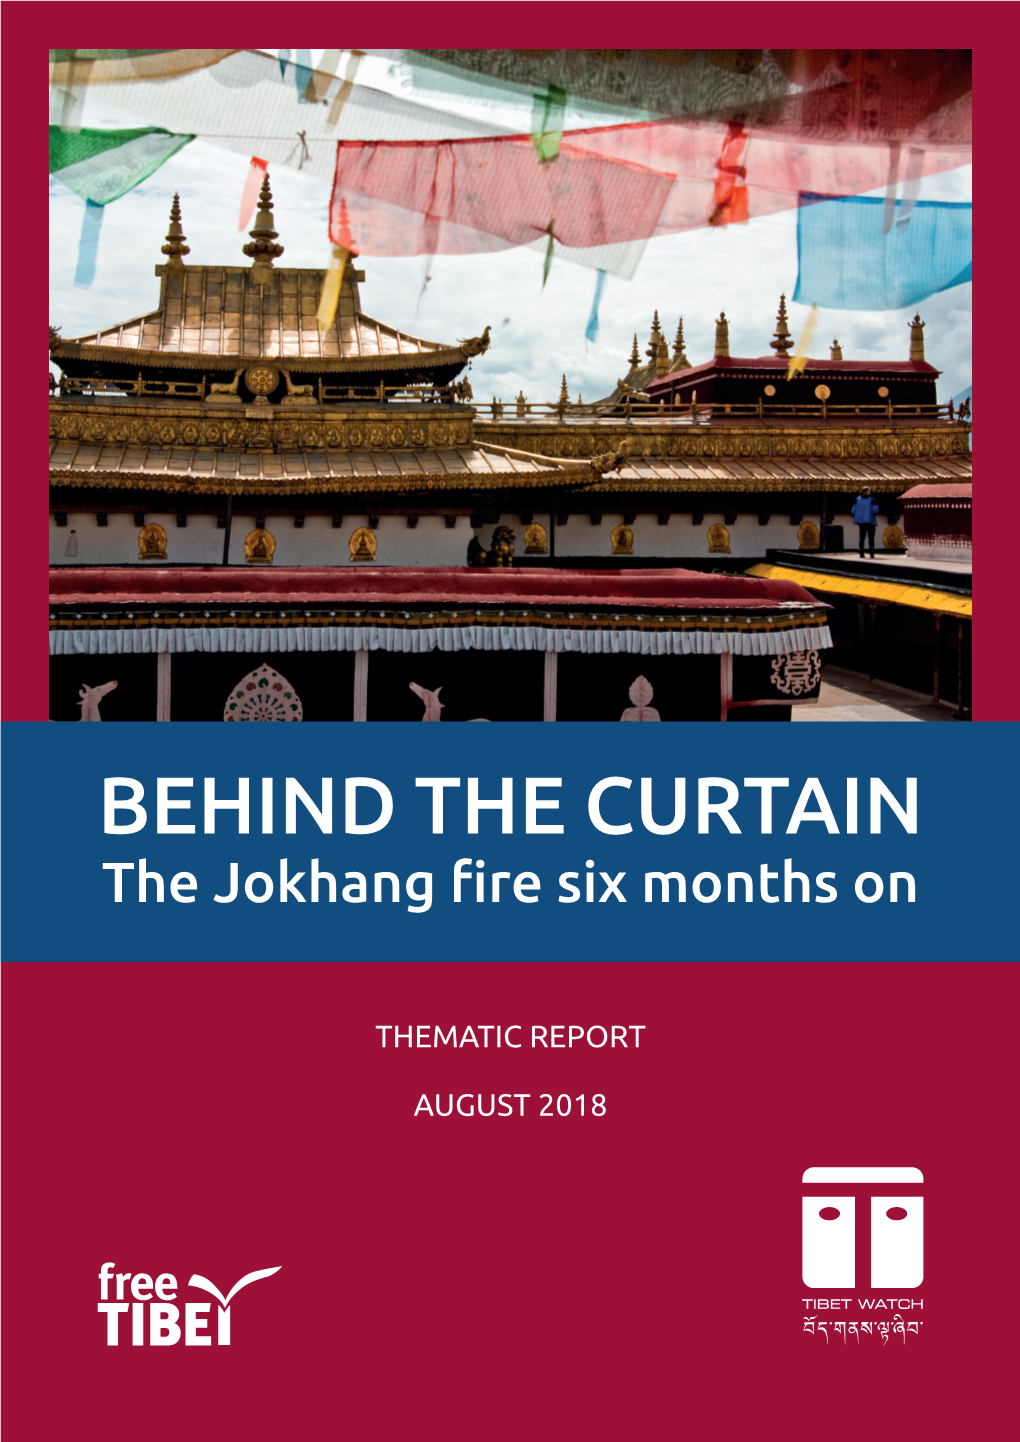 The Jokhang Fire Six Months On